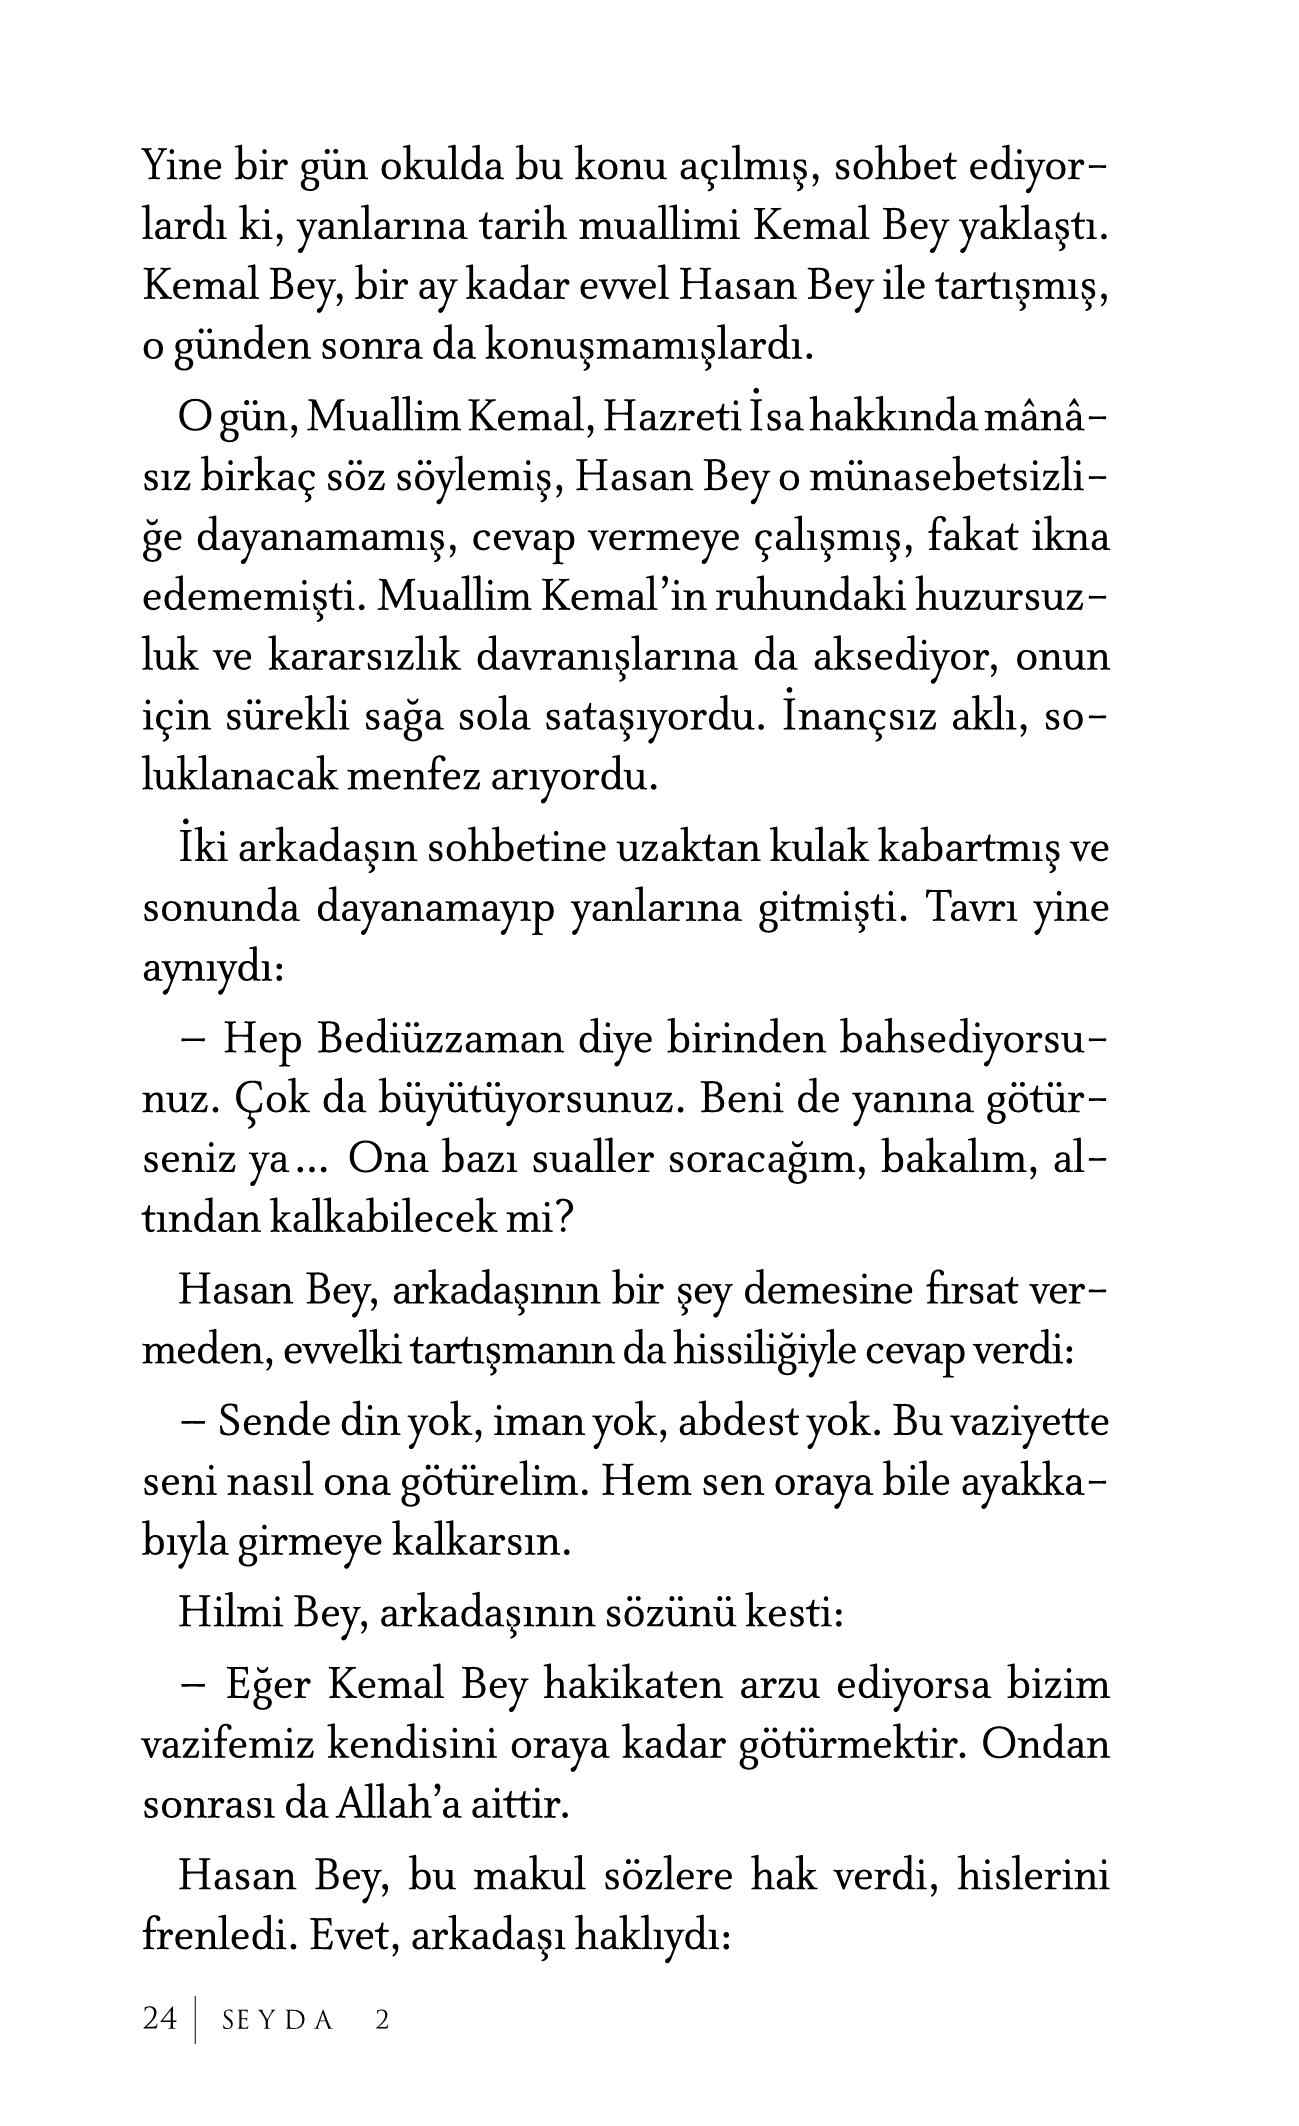 Mehmet Akar - Seyda 2 - Barla Hayati - SahdamarY.pdf, 481-Sayfa 